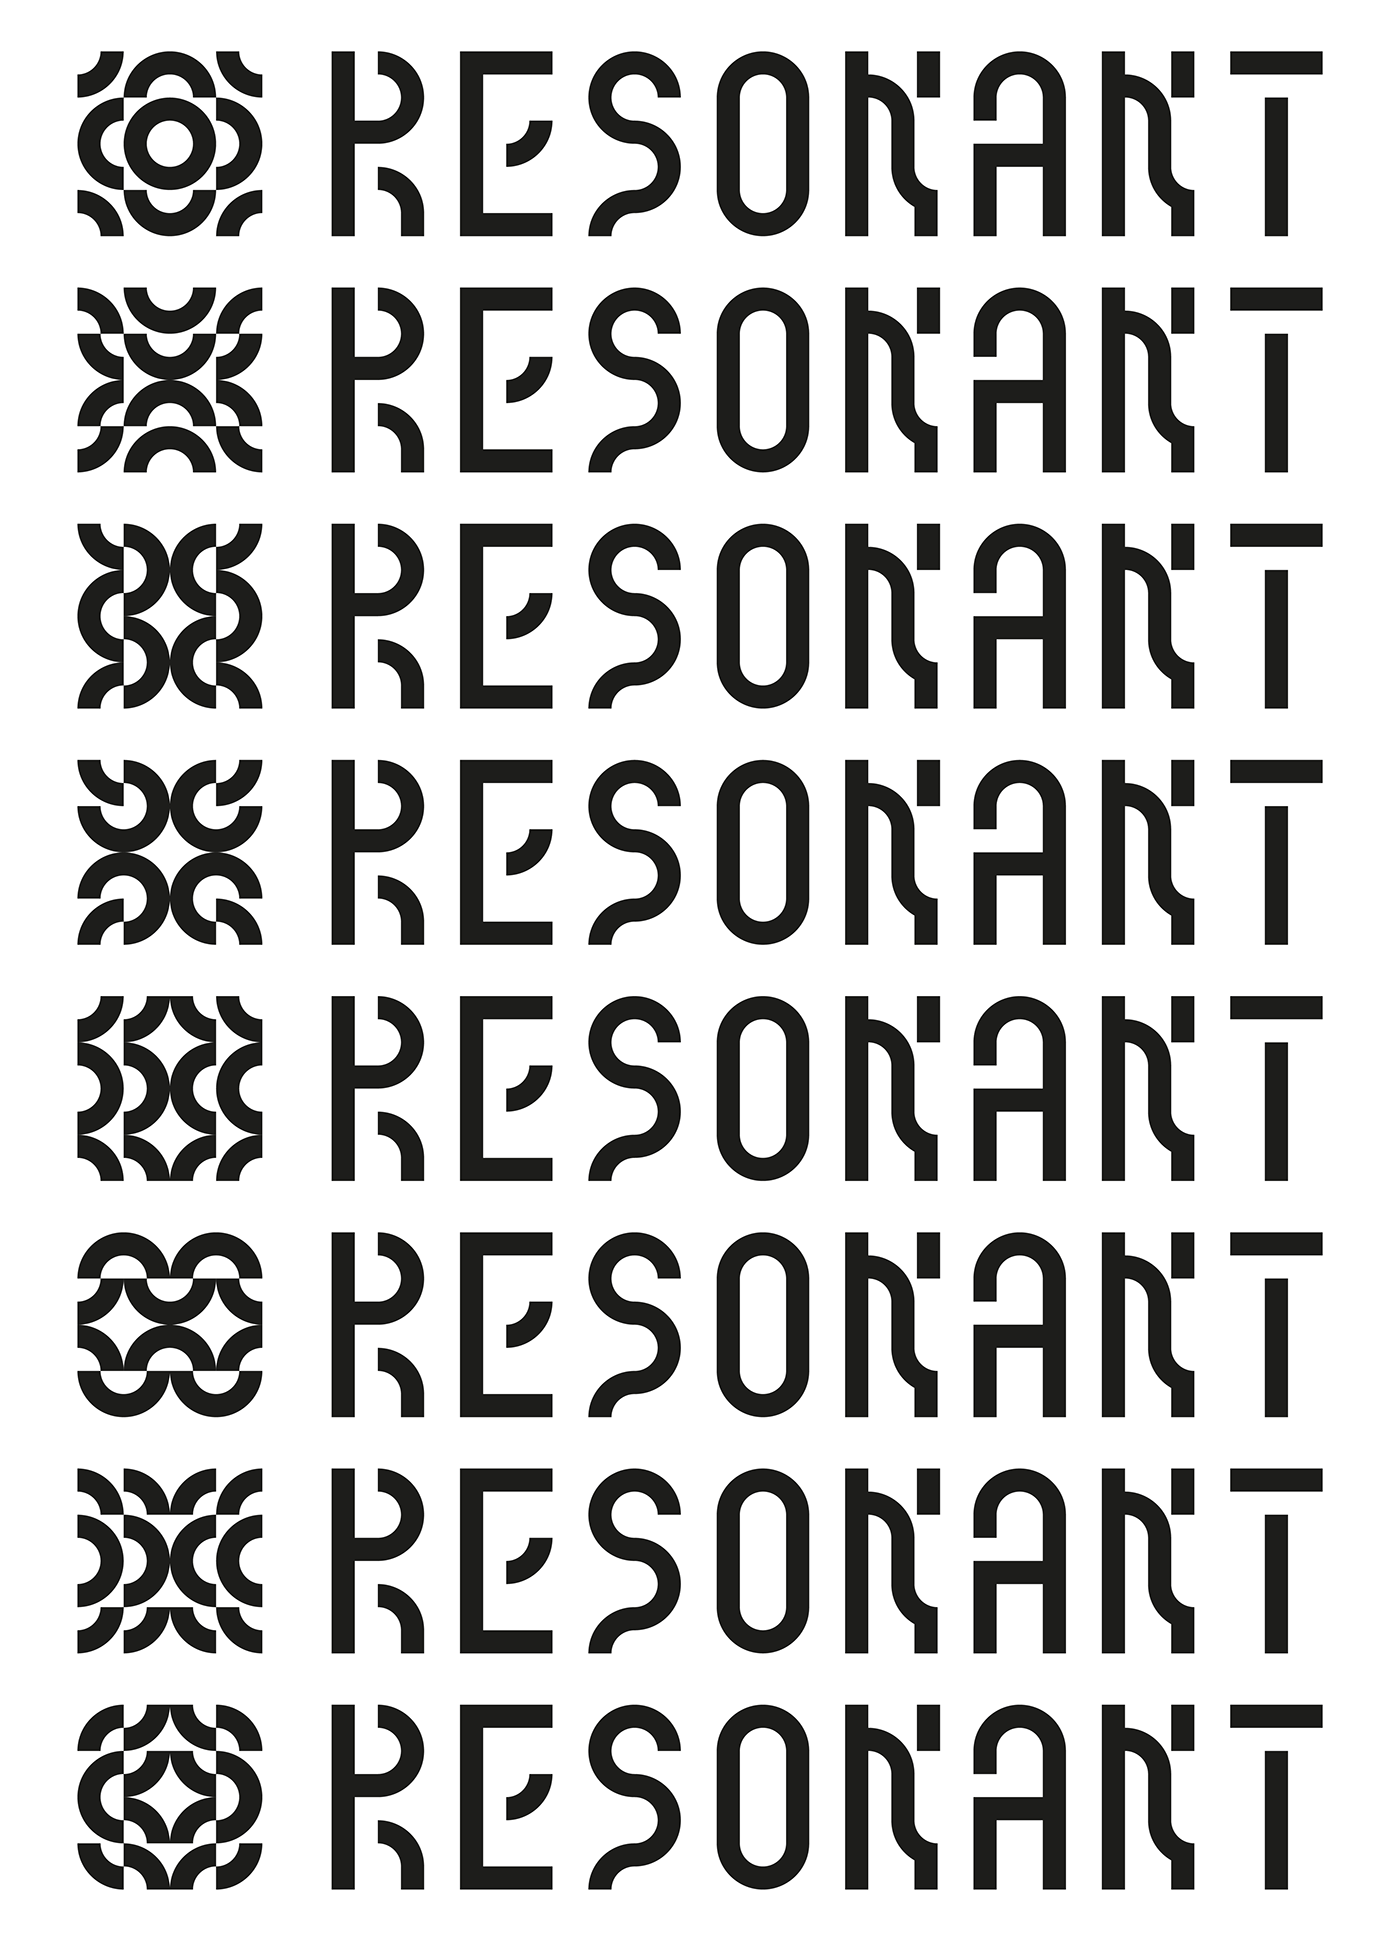 resonant sundaze typography   nodo cymatics modules gradients poster electronic music graphic design 